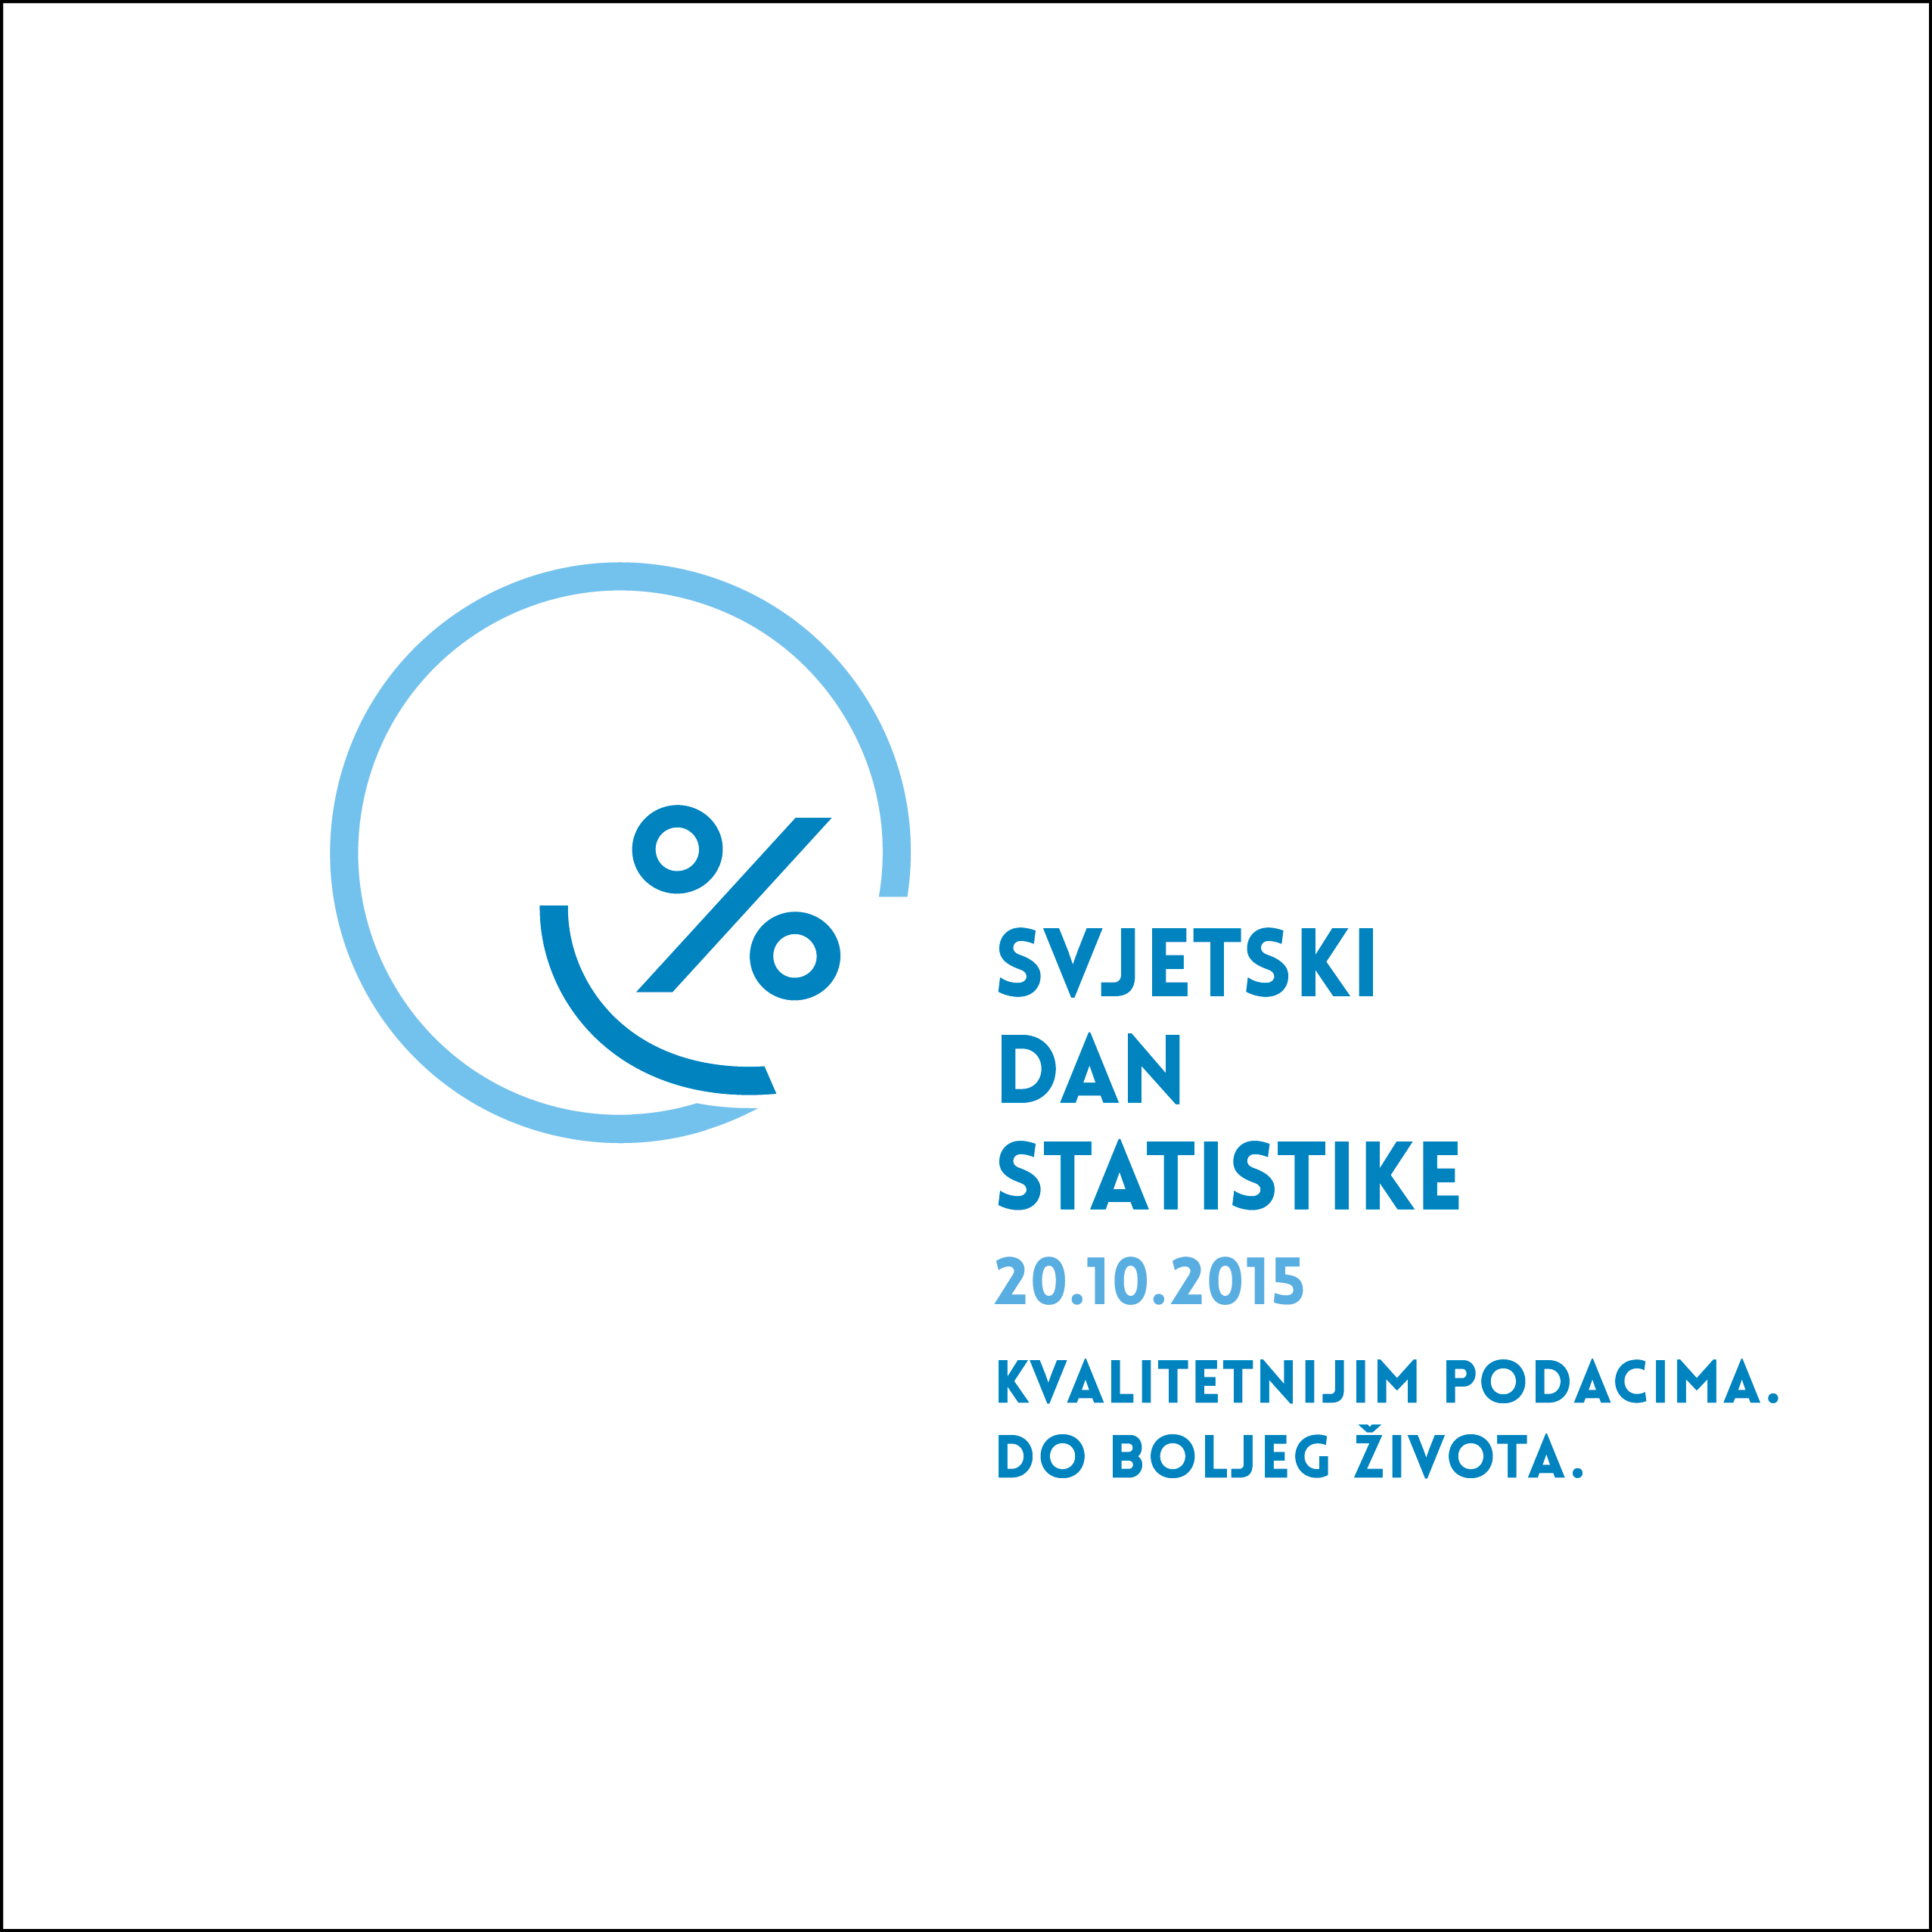 World Statistics Day Logo in Croatian